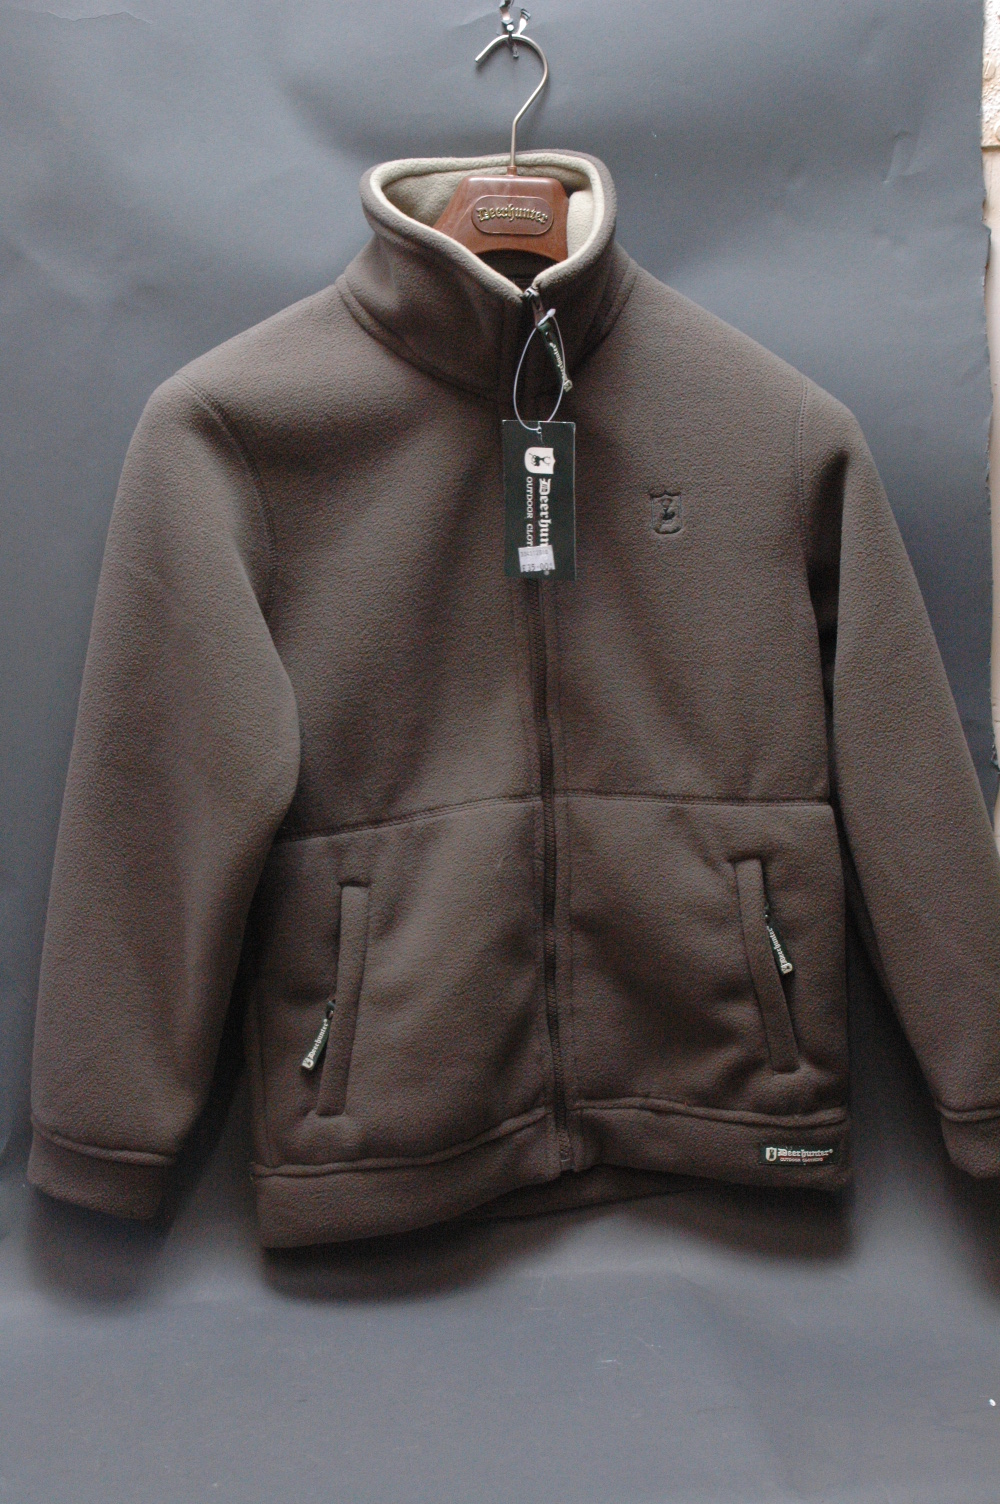 Deerhunter Wexford bonded fleece jacket (XS) new.